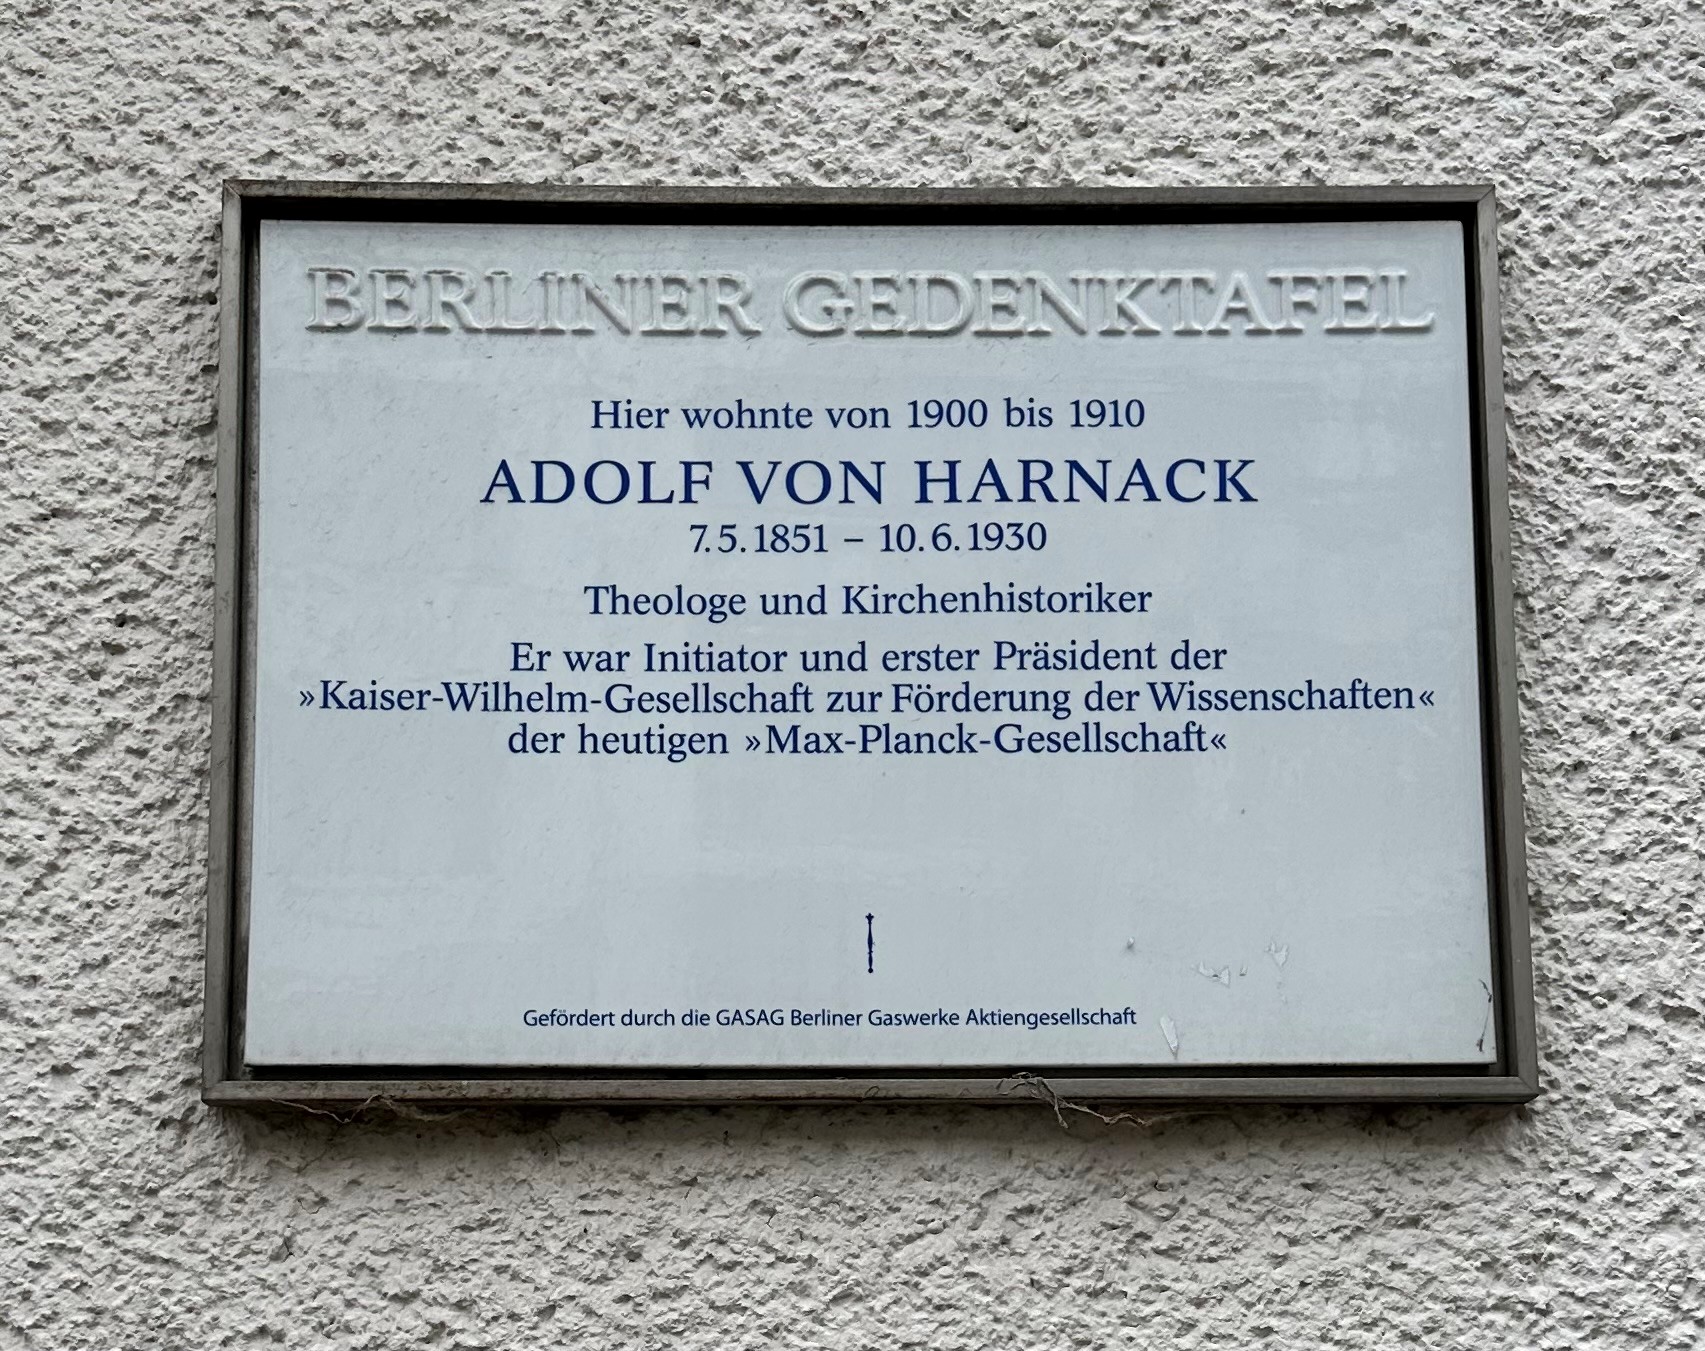 Berliner Gedenktafel in Charlottenburg-Wilmersdorf
Bild: René Powilleit